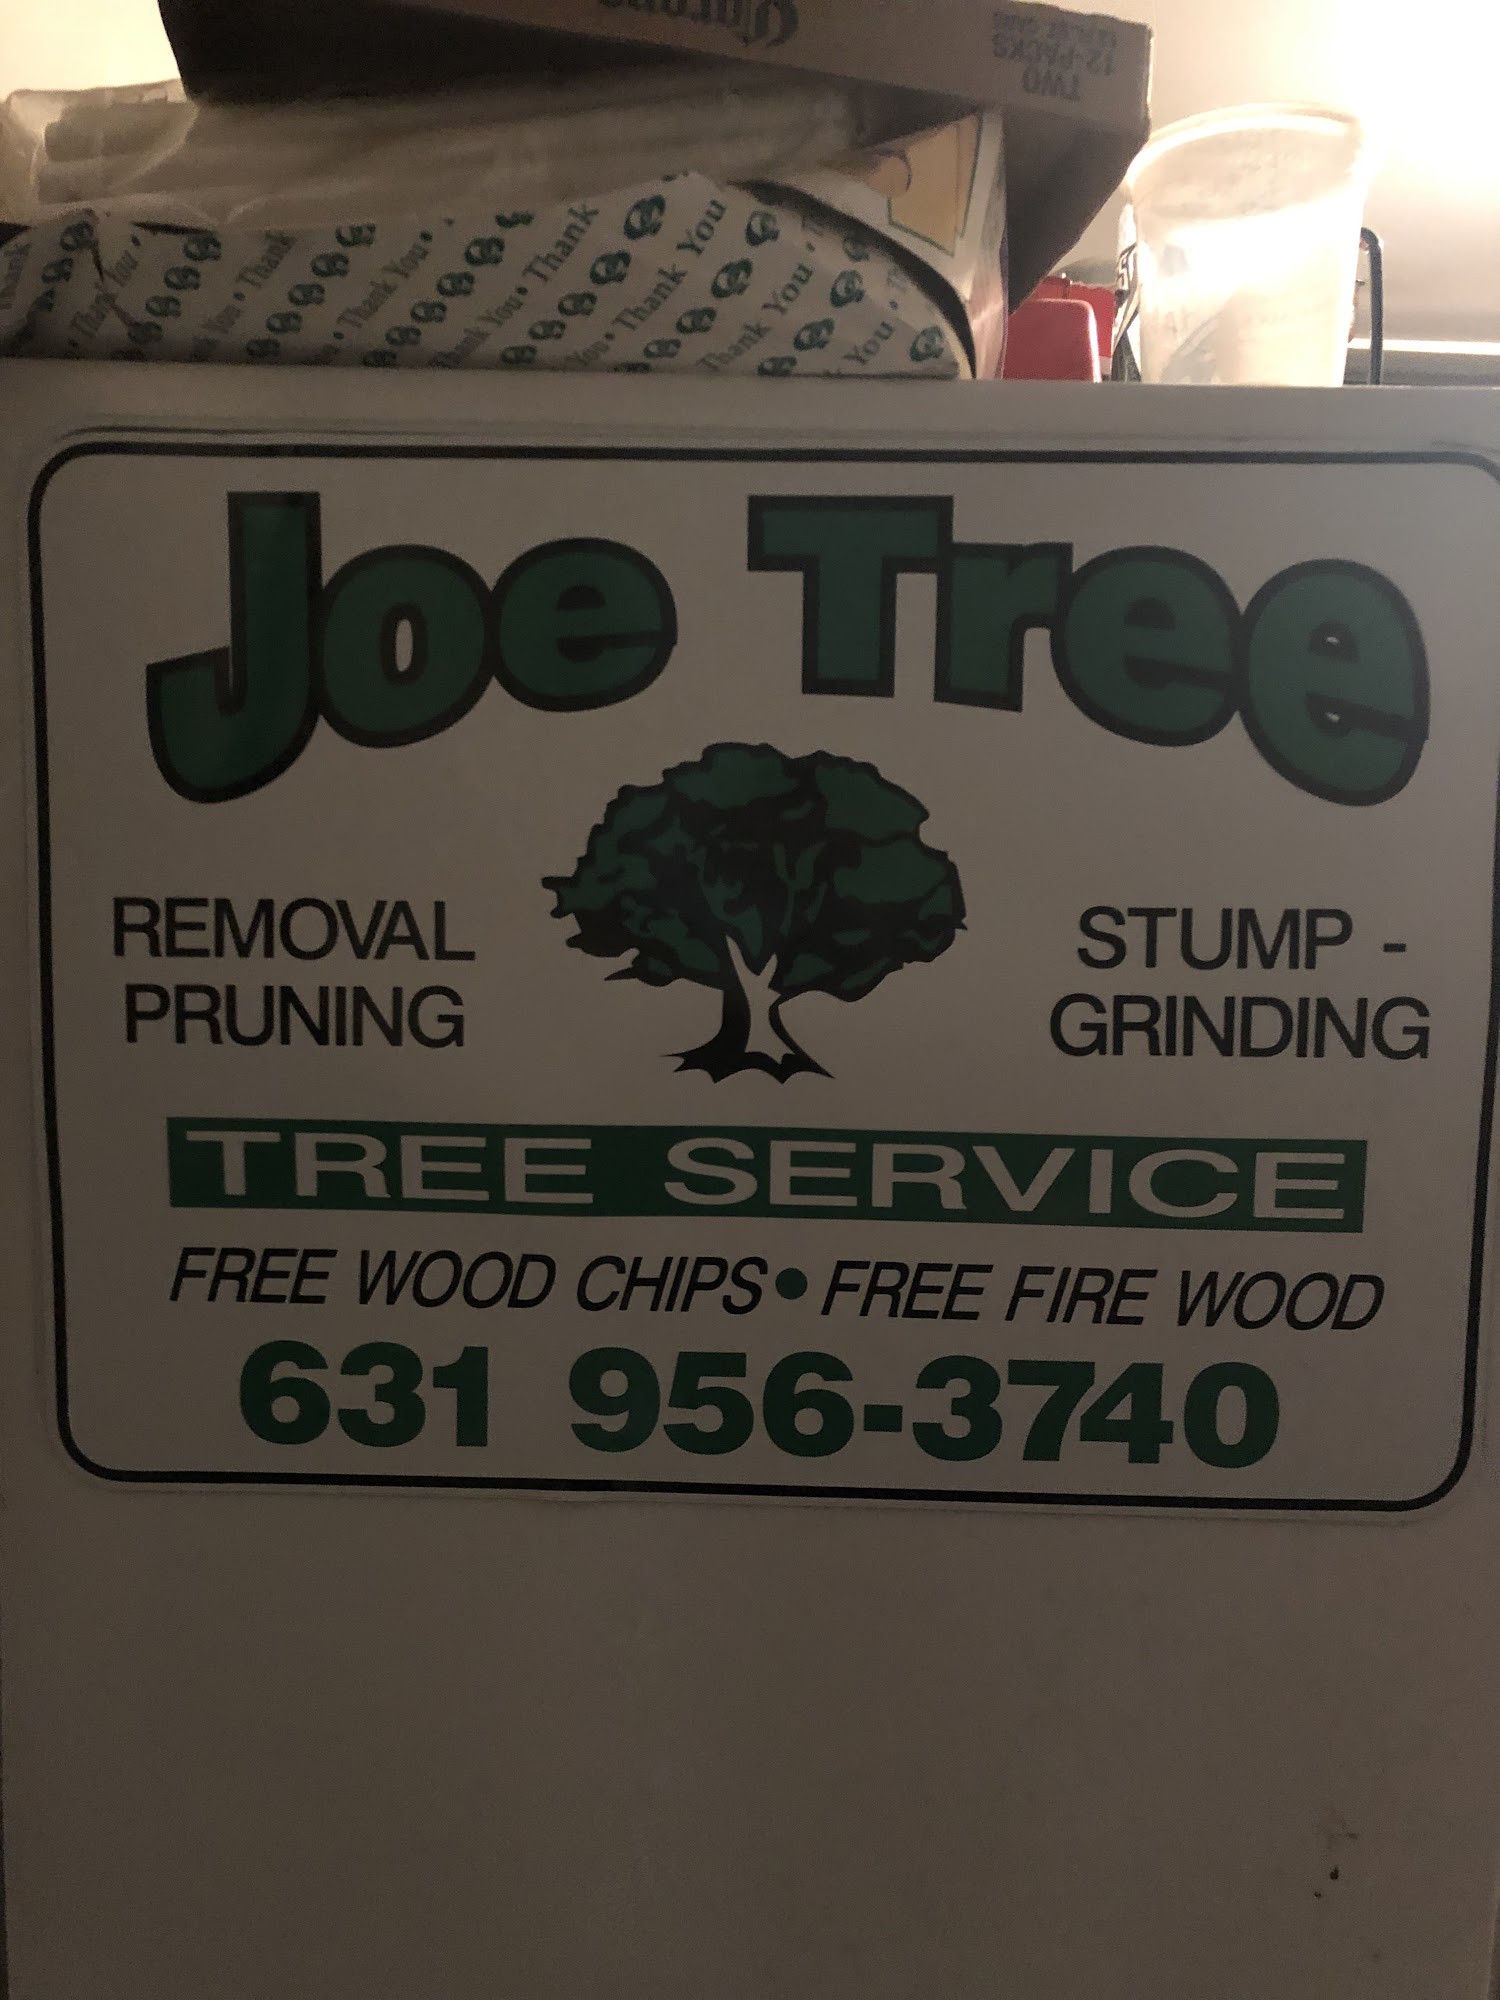 Joe Tree, Tree Service Inc